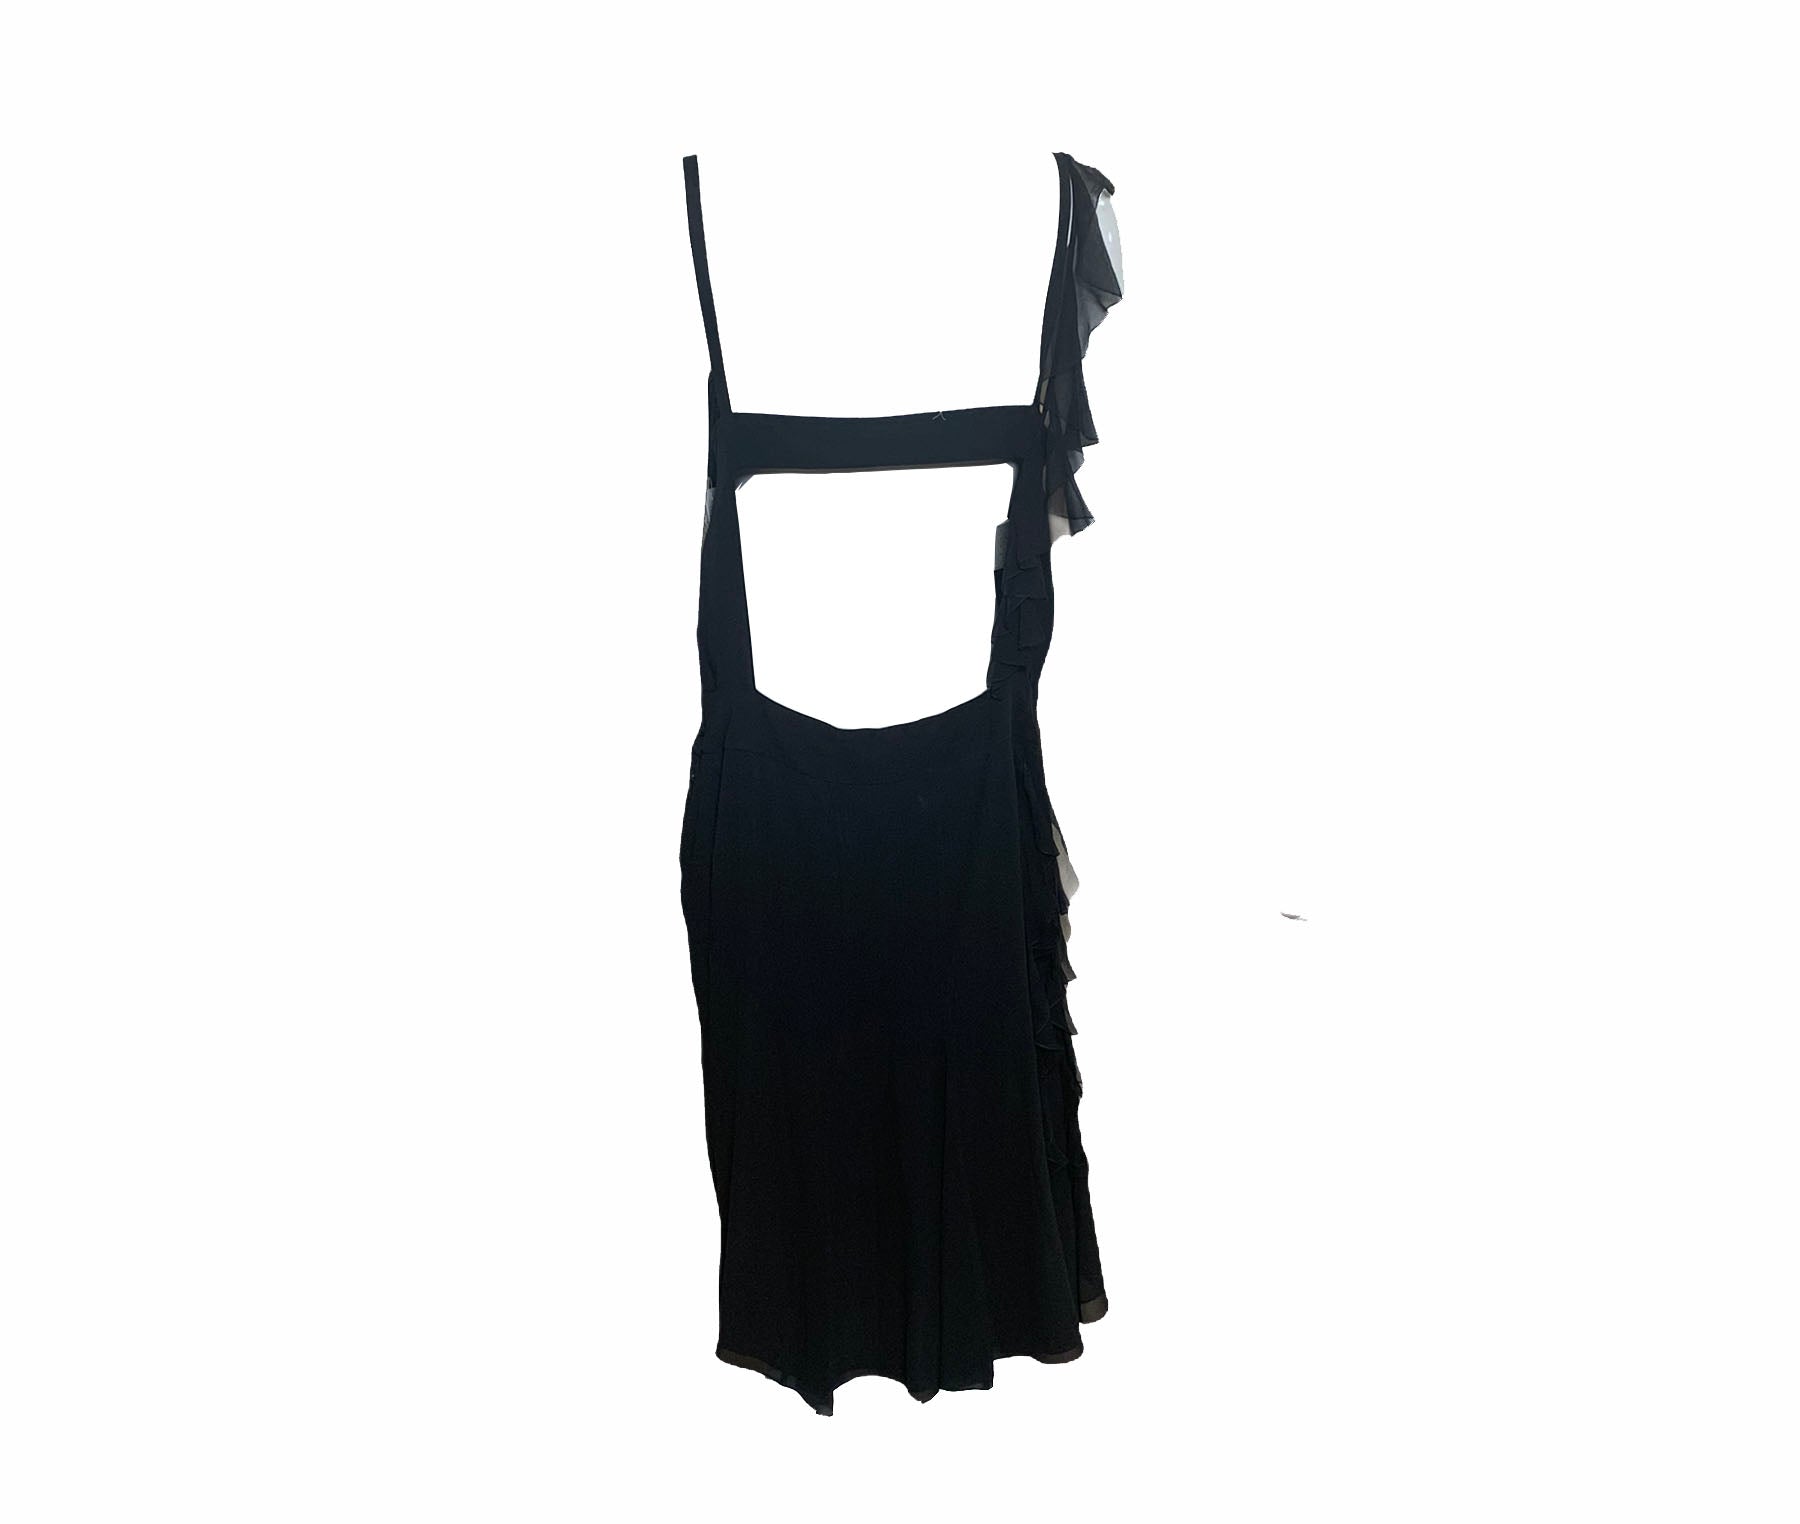  Galliano Attribution Black 30s Inspired Chiffon Dress  BACK 3 of 3